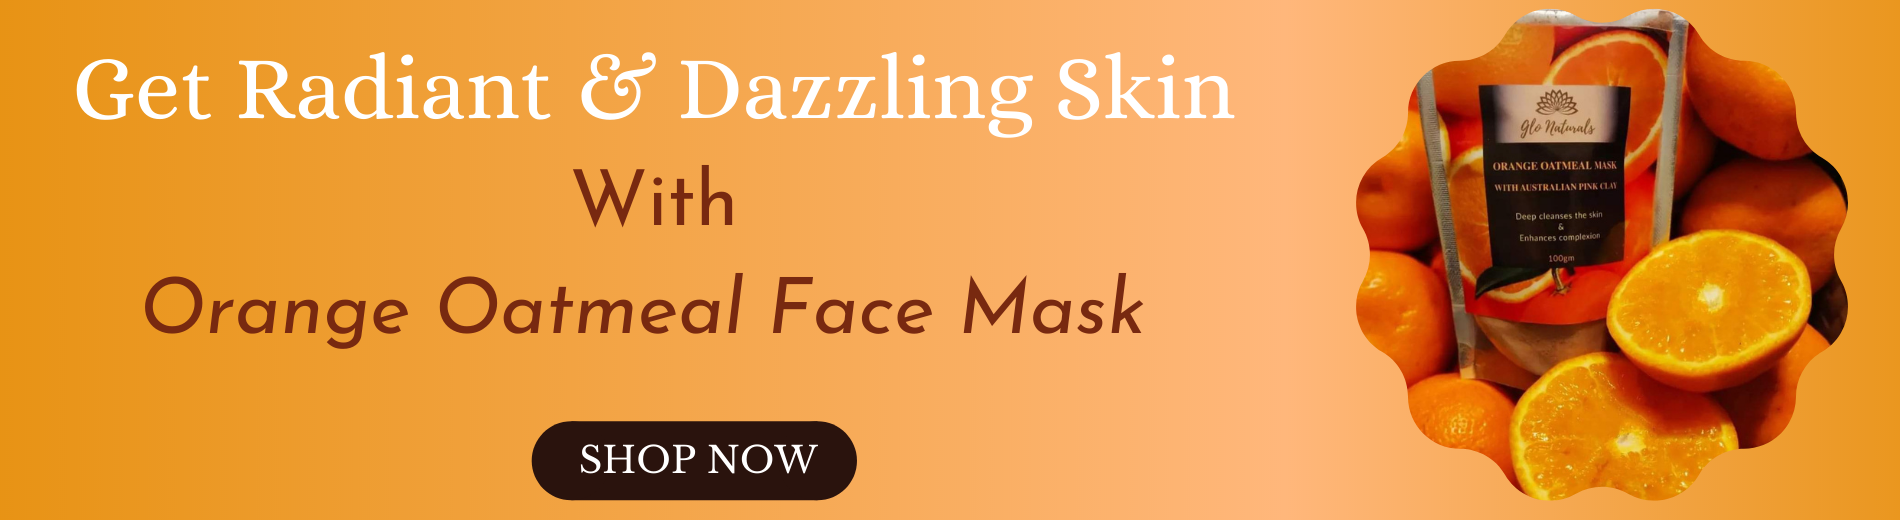 Get Radiant & Dazzling Skin (2)